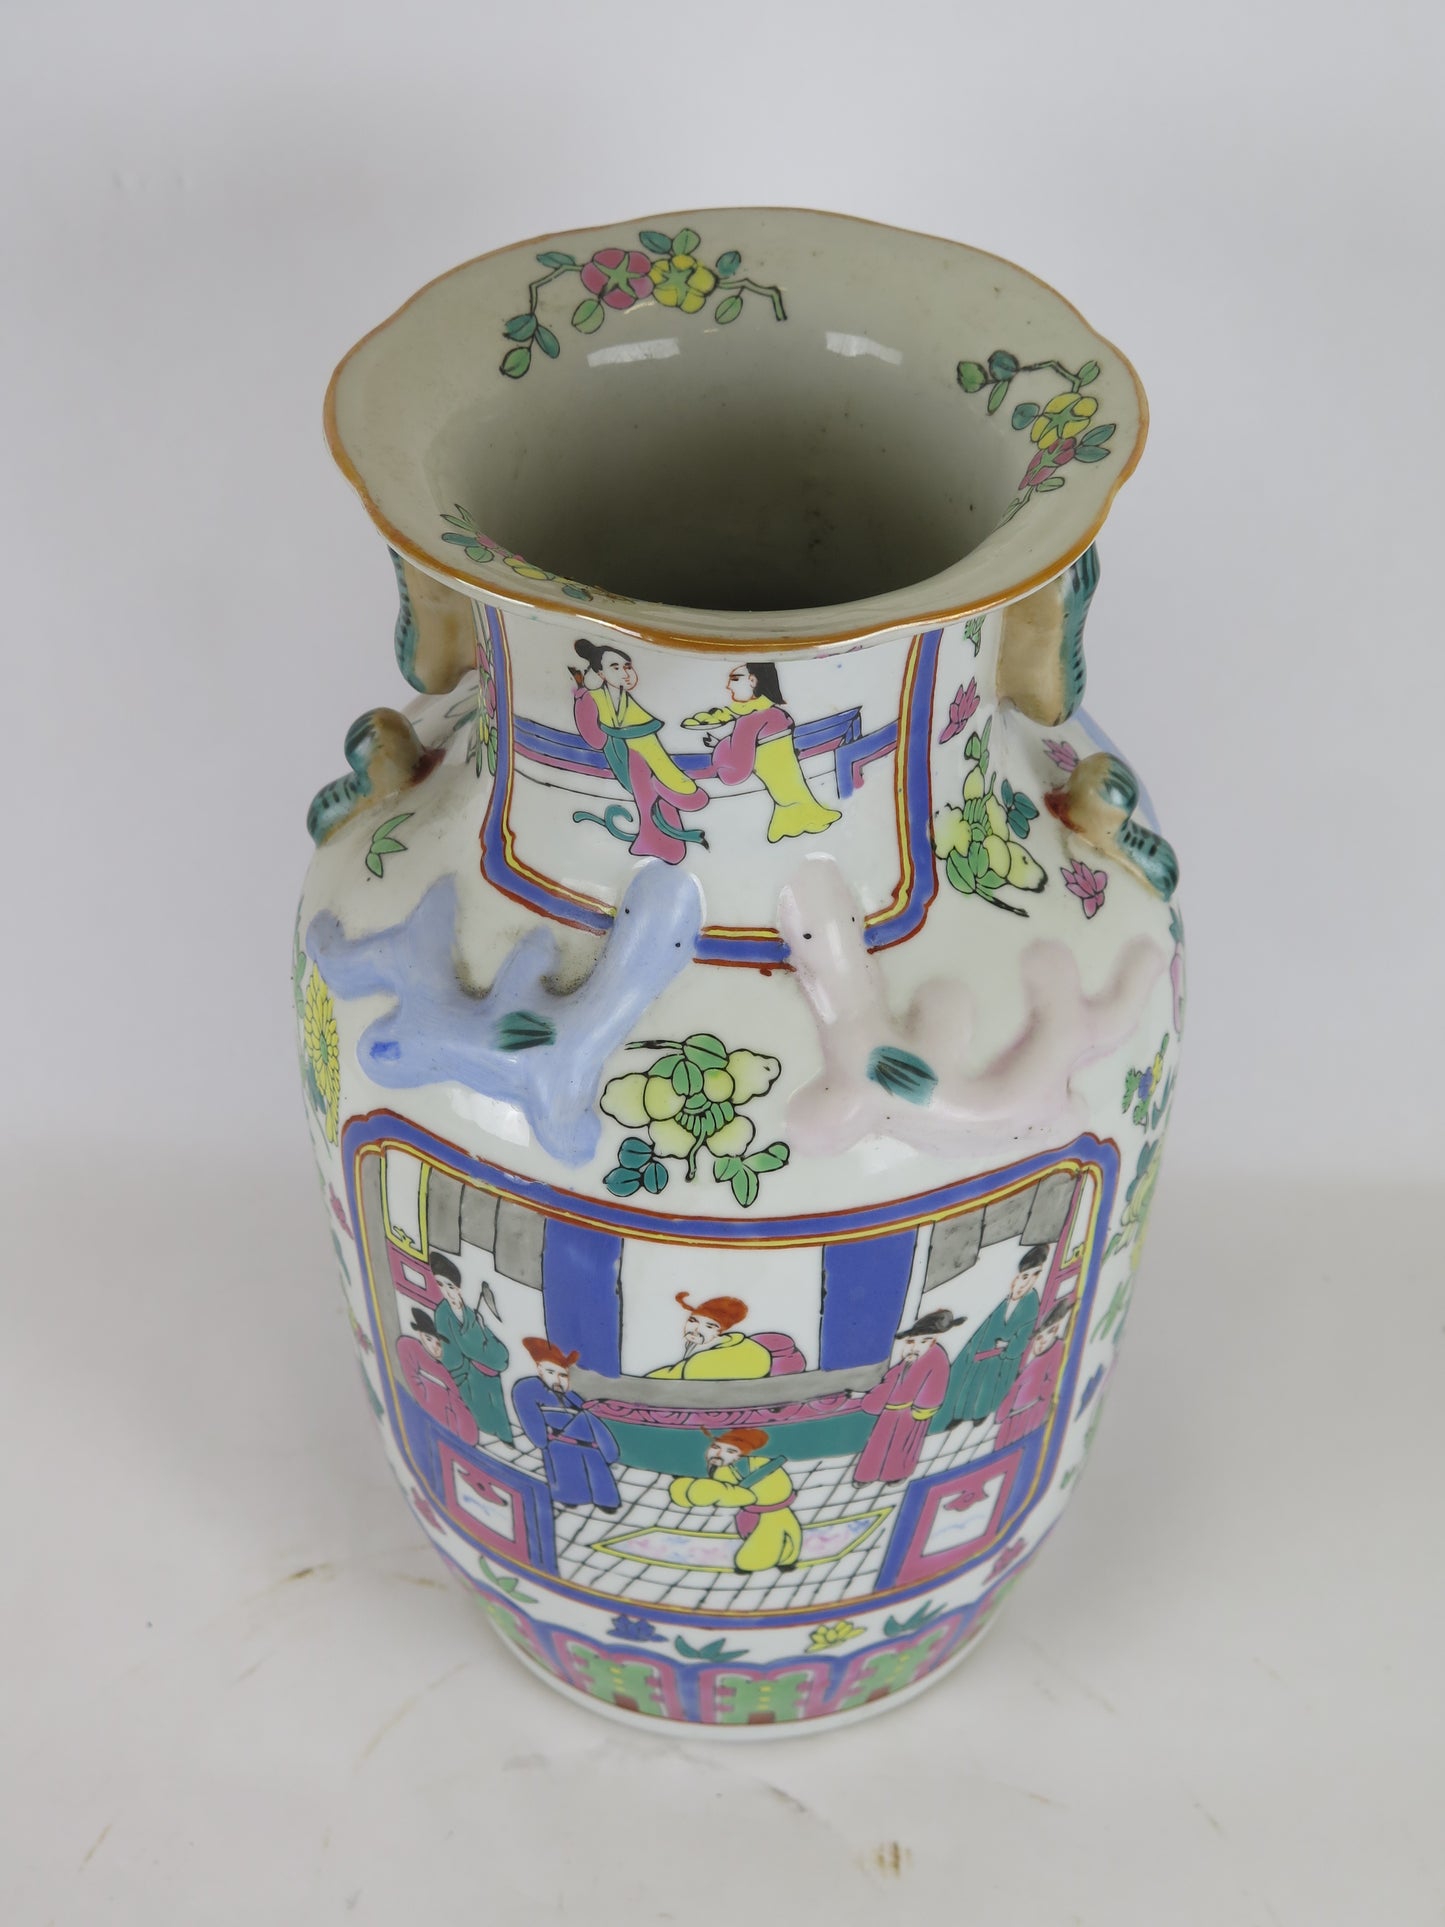 Hand-painted ceramic vase China 1900s Asian Chinese sustainable art green CM3